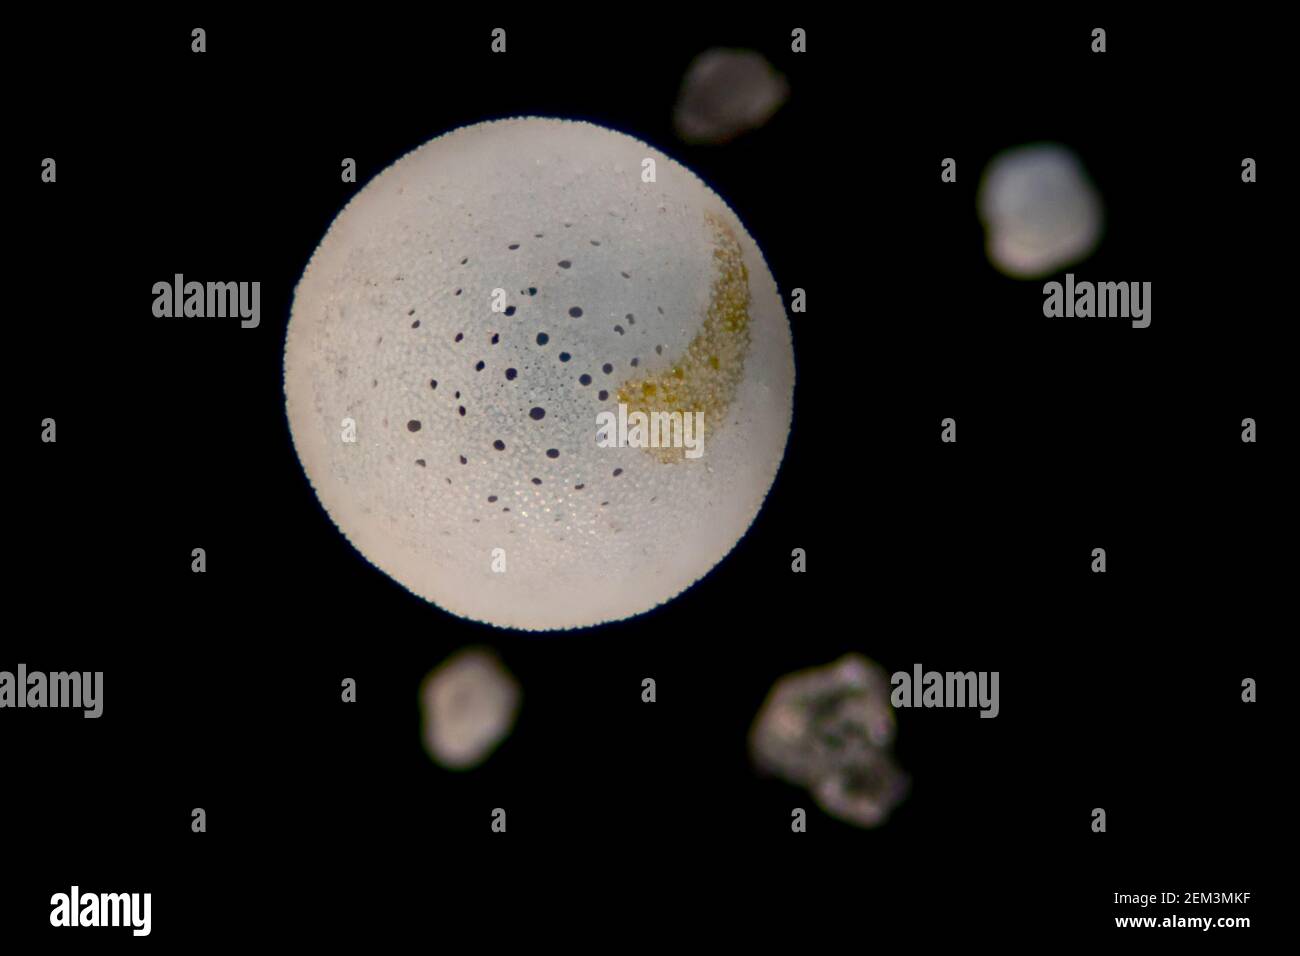 foraminiferans, forams (Foraminiferida), Recent planktonic foraminifera, dark field microscopic image, magnification x20 related to 35 mm Stock Photo